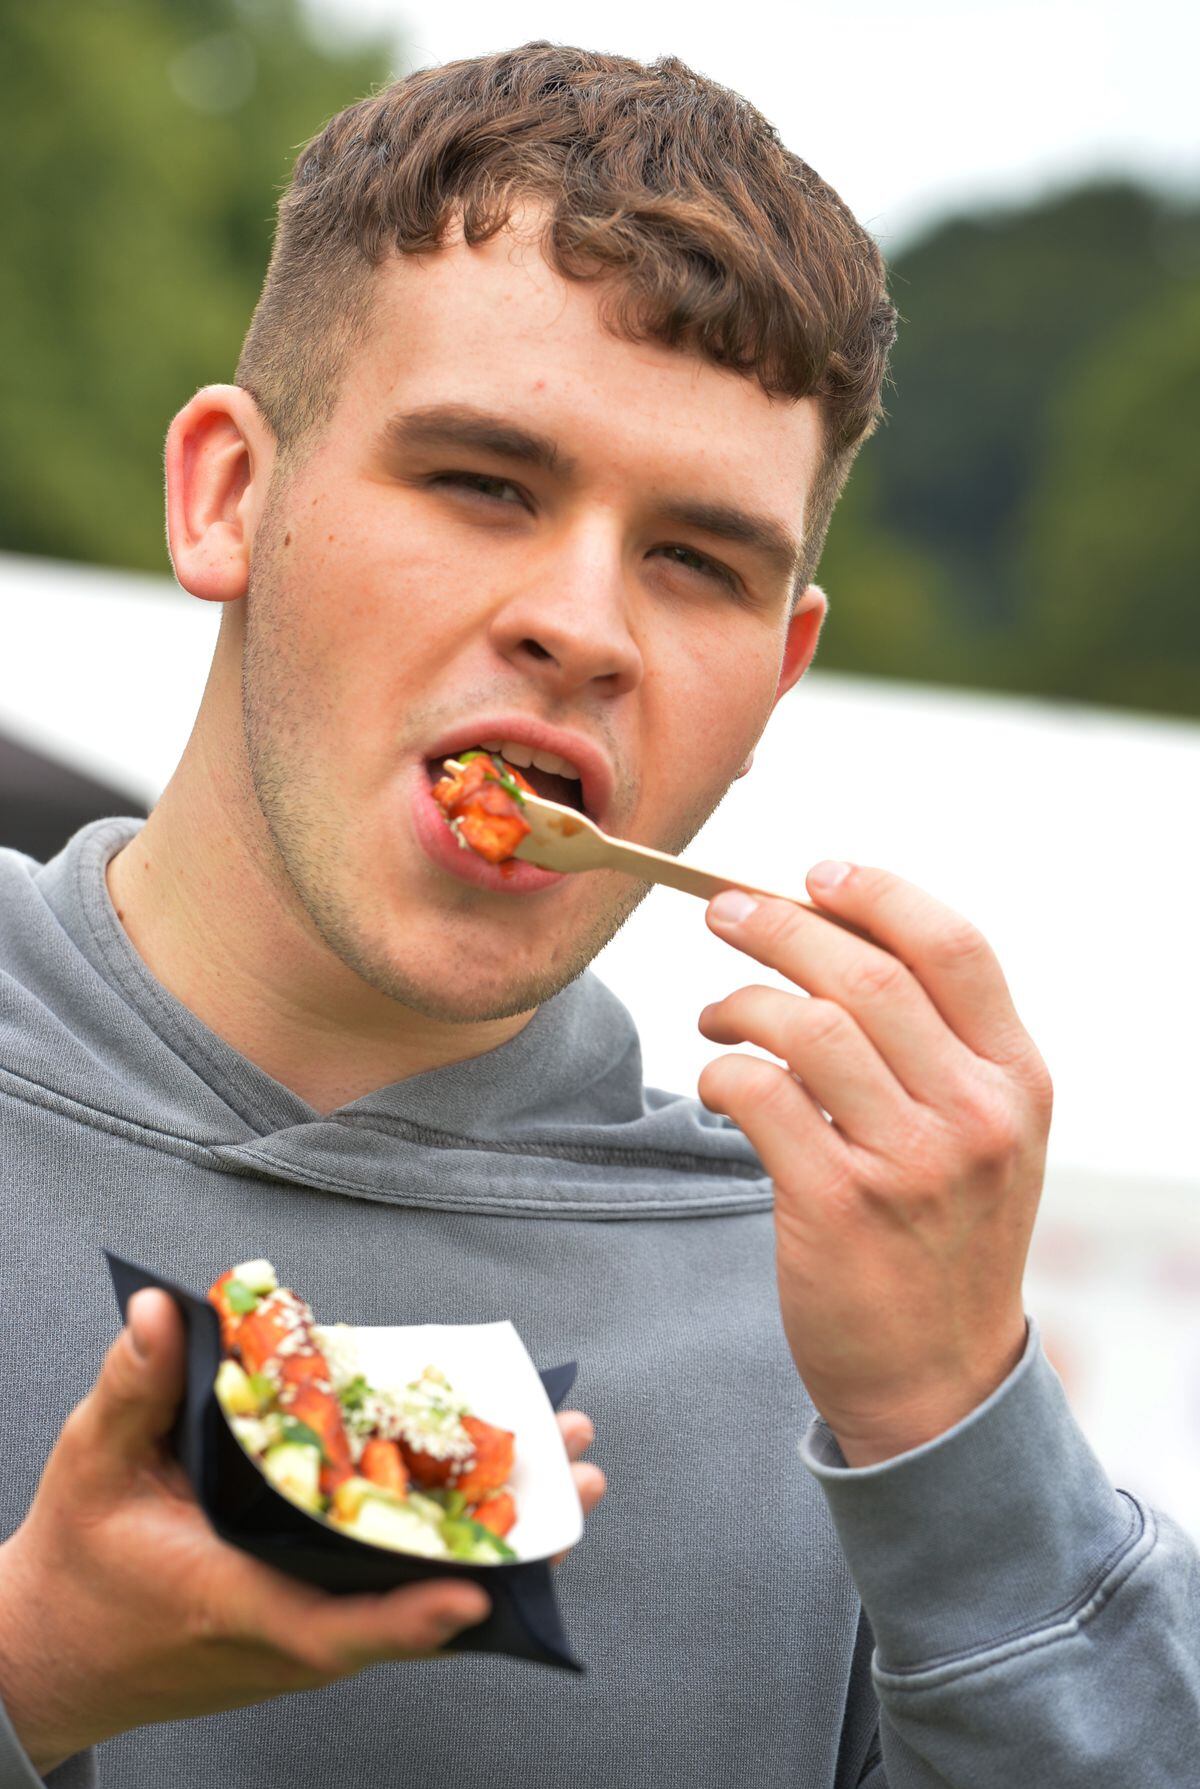 Enjoying food from Halloumination, Sam Richards, of Shrewsbury, during Shrewsbury Food Festival, at The Quarry